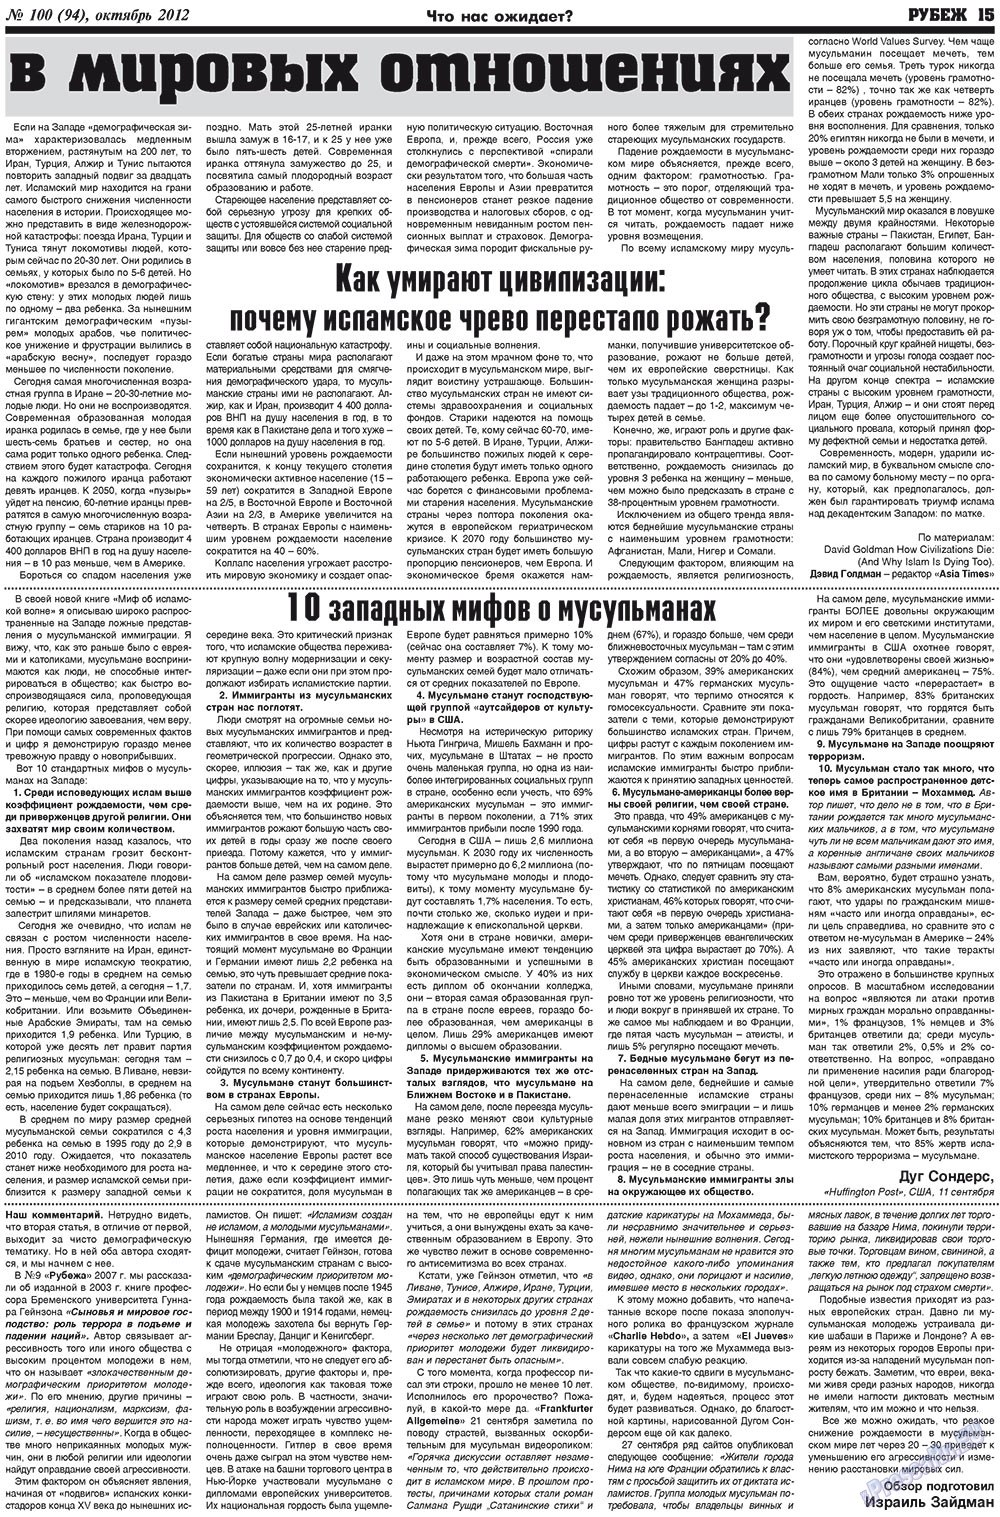 Рубеж, газета. 2012 №10 стр.15